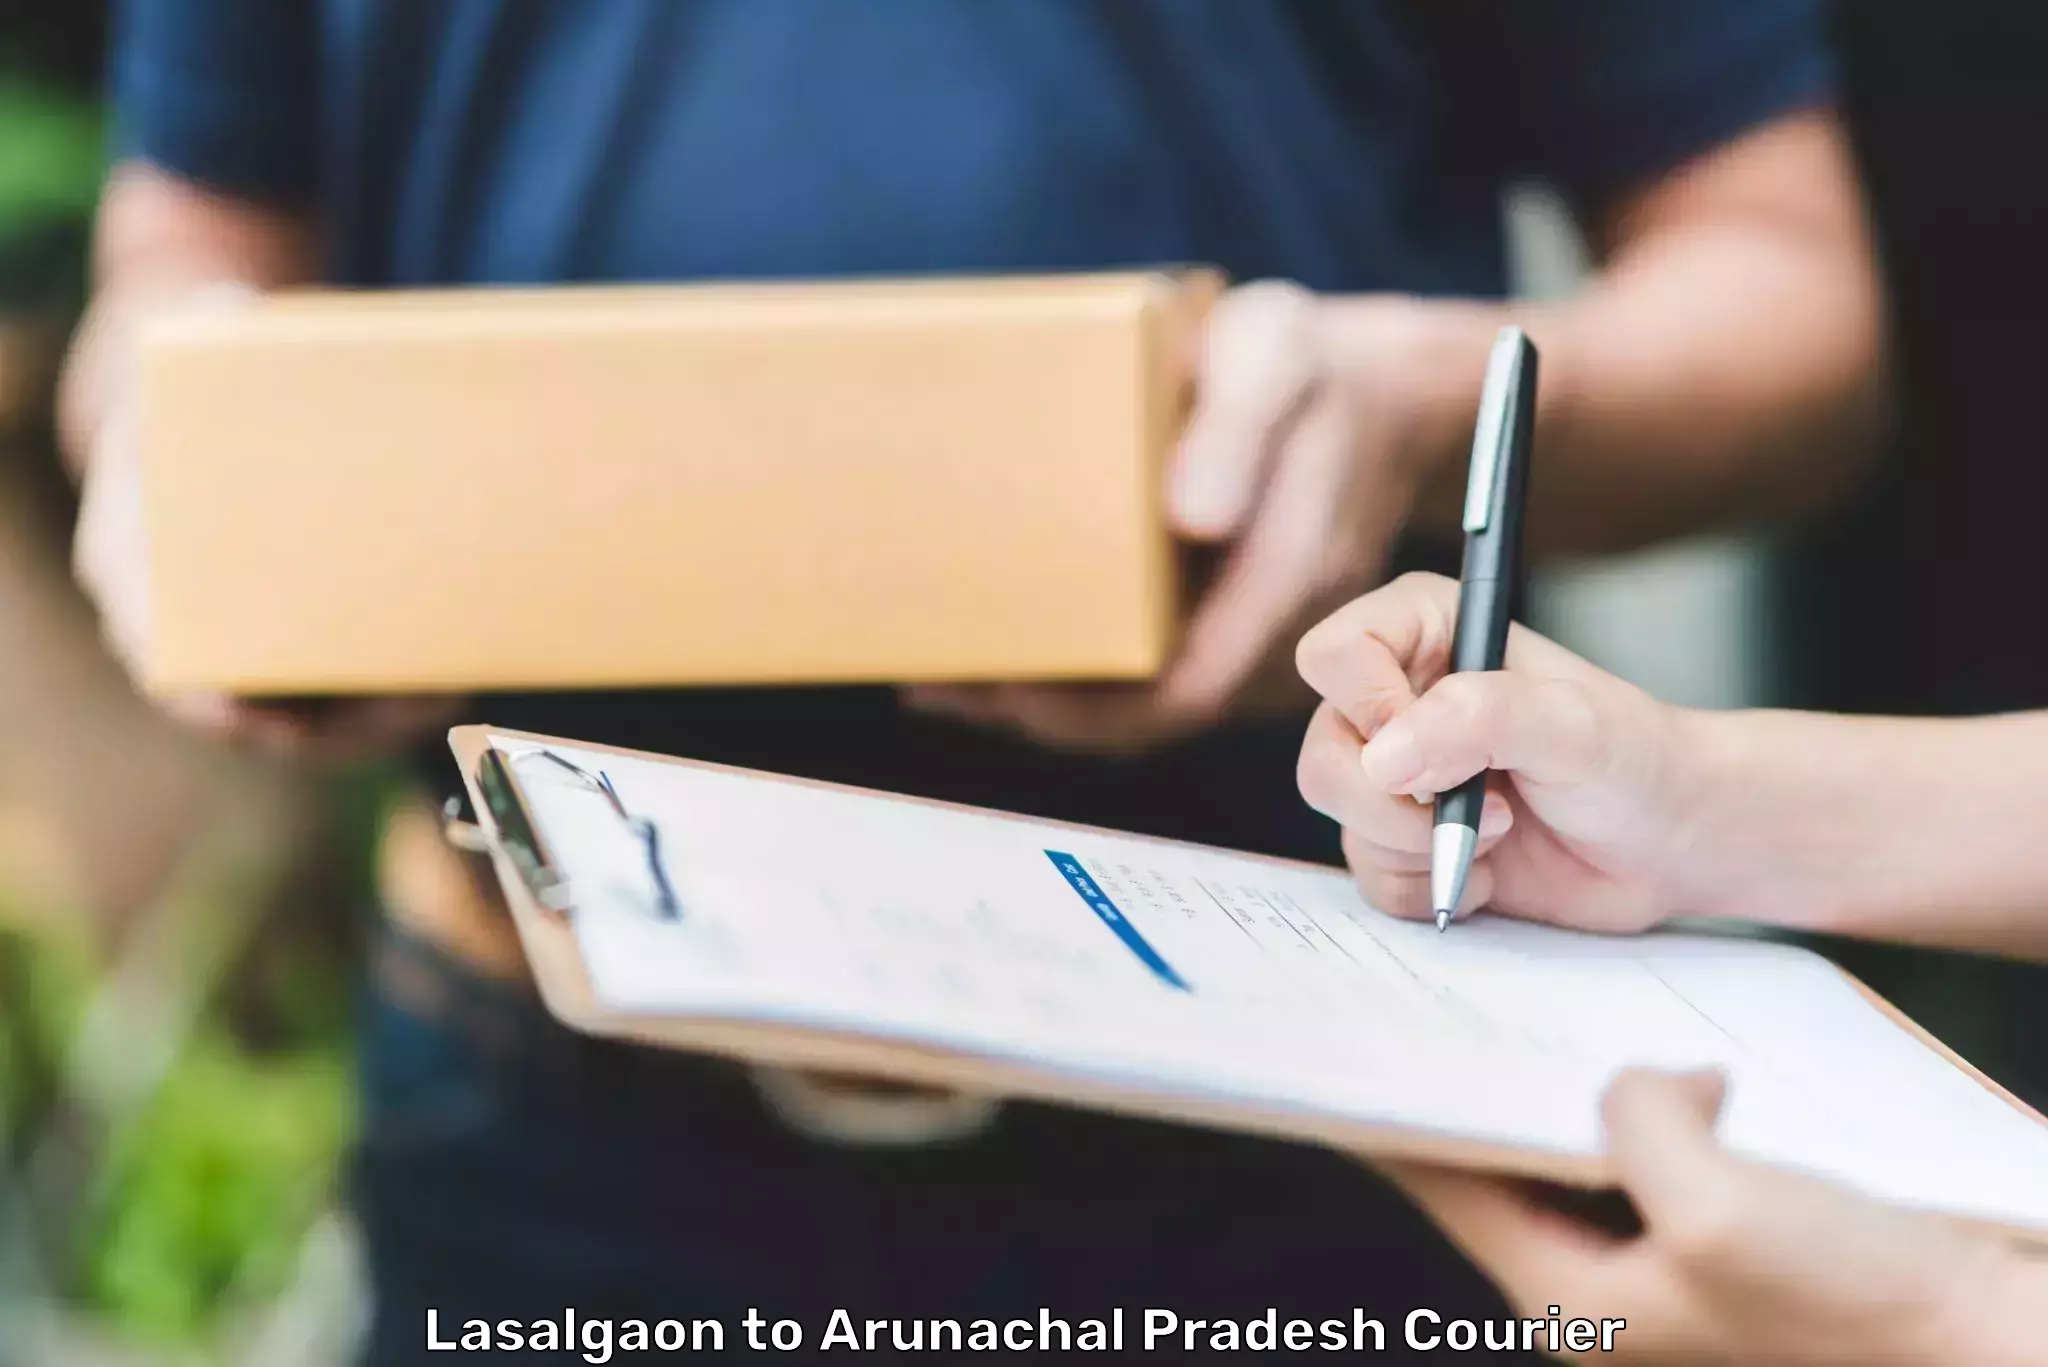 Courier service innovation Lasalgaon to Arunachal Pradesh